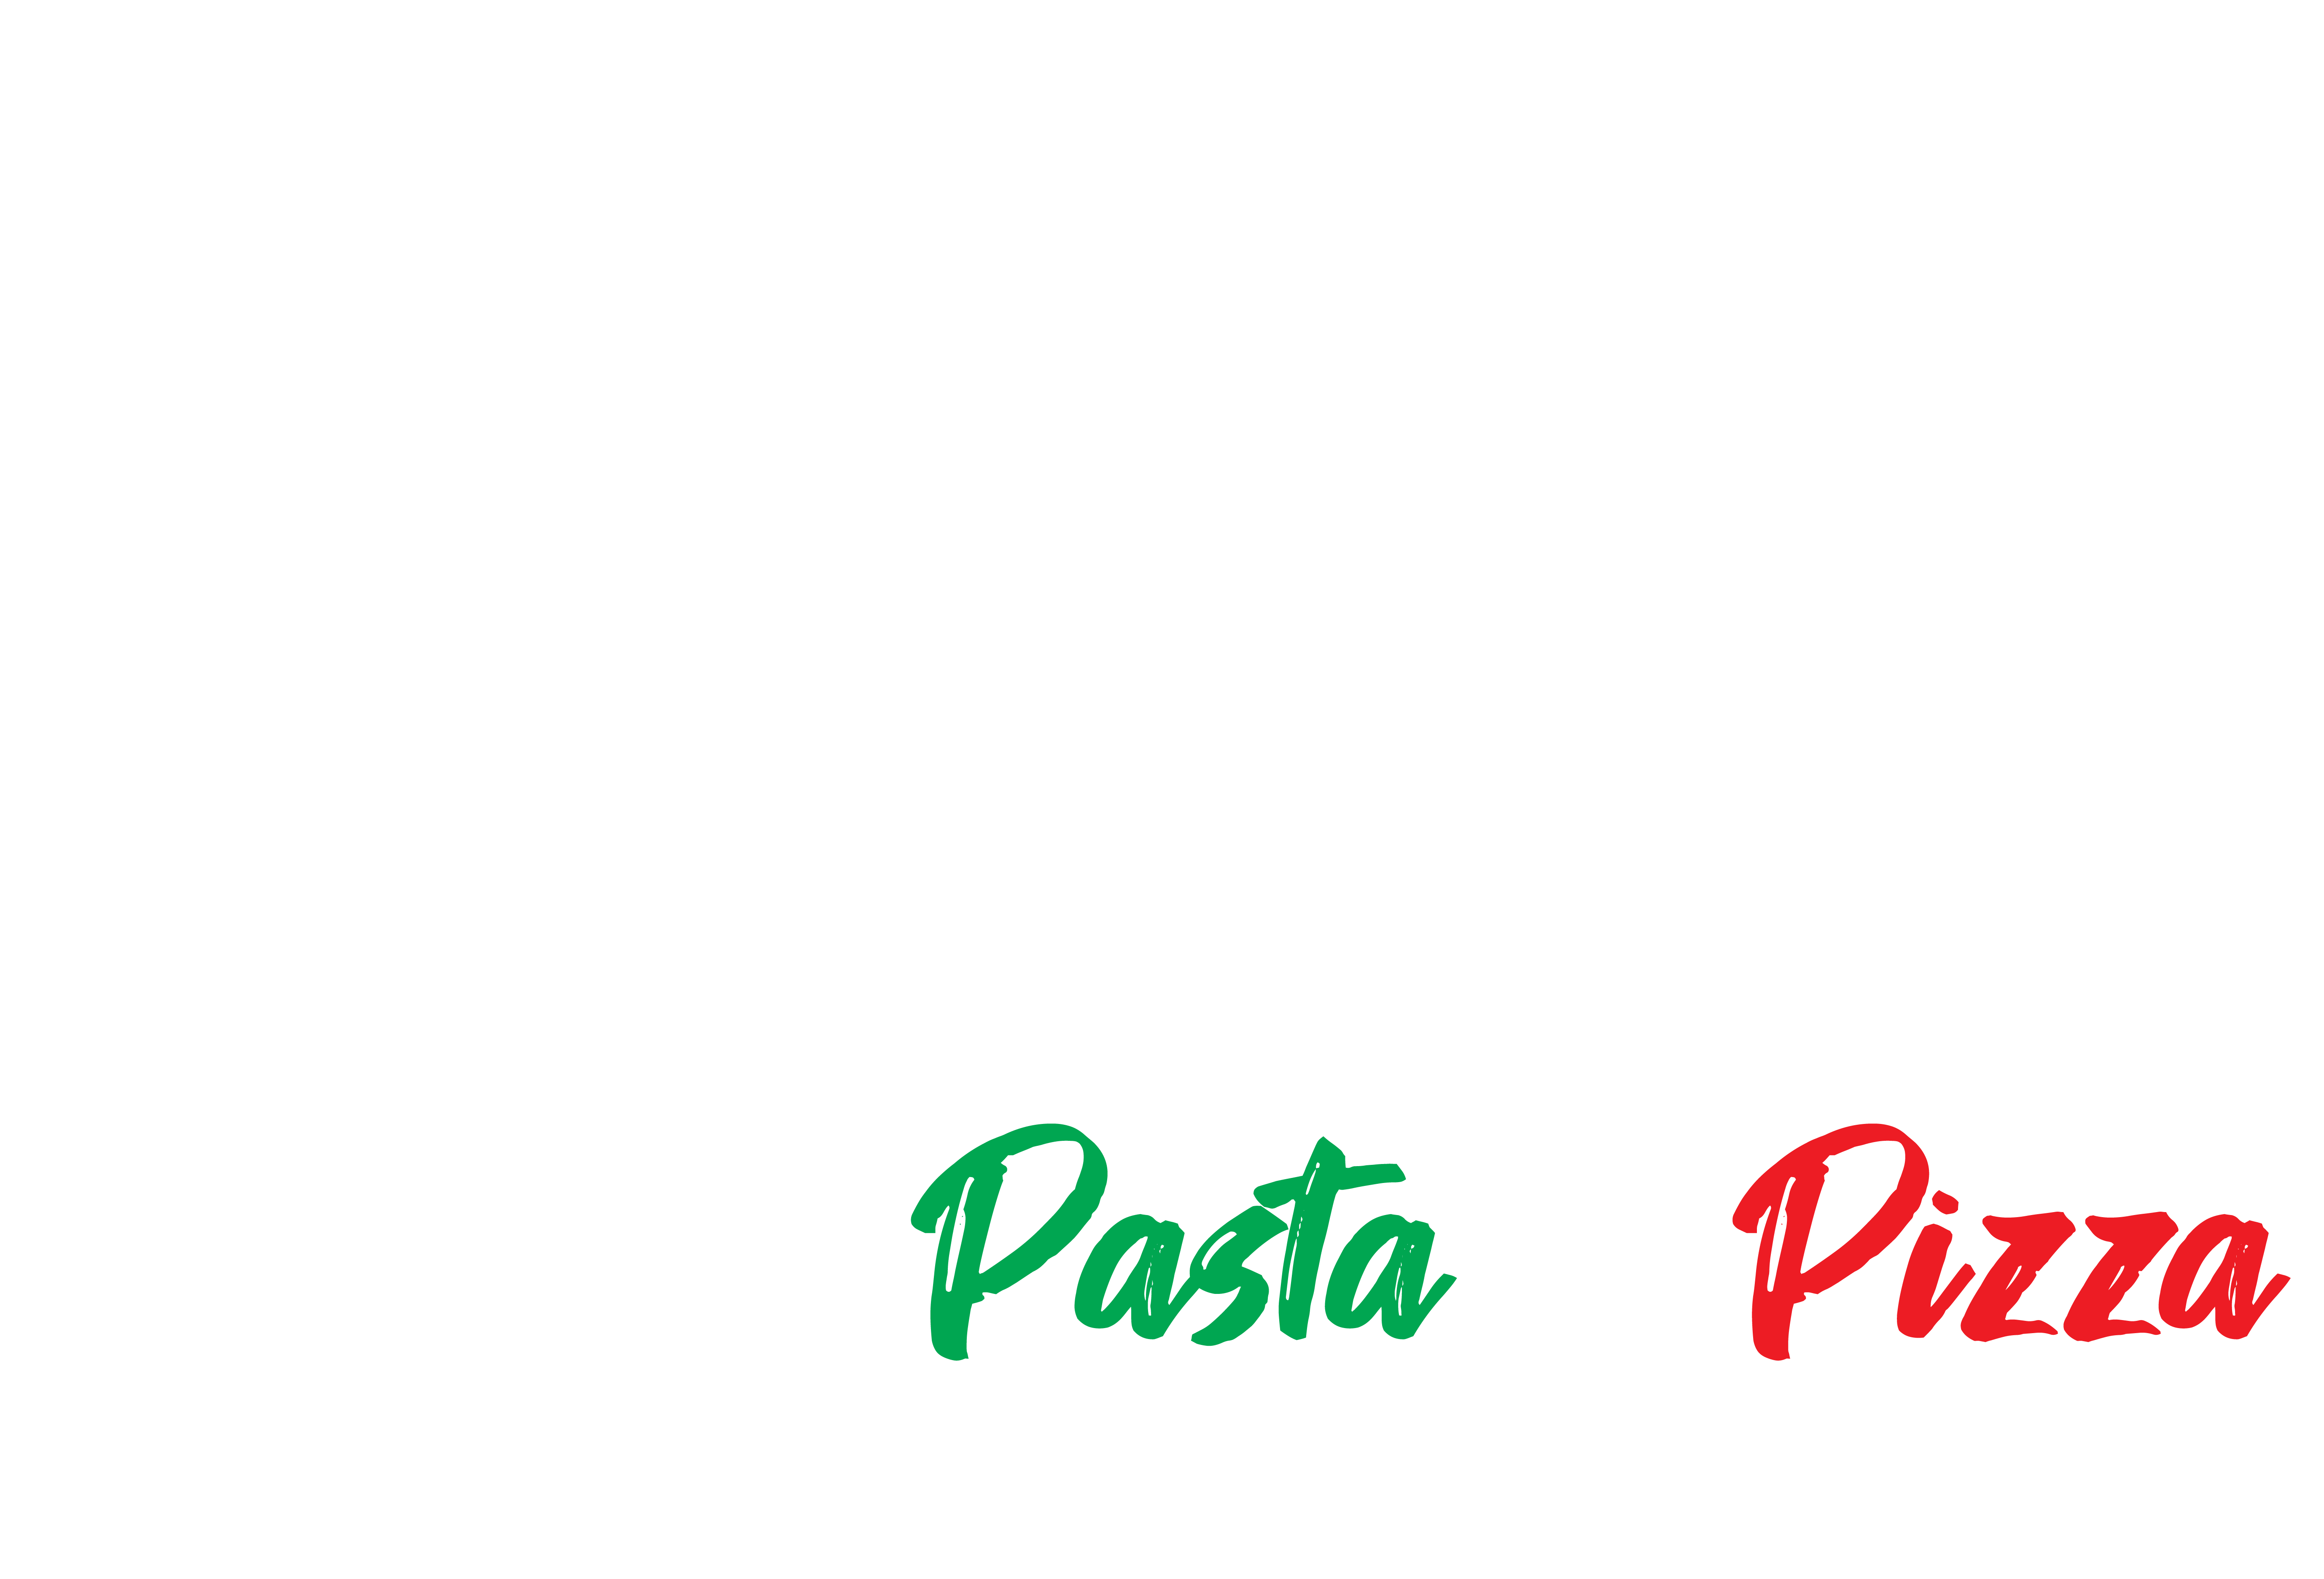 Jan's pasta & pizza